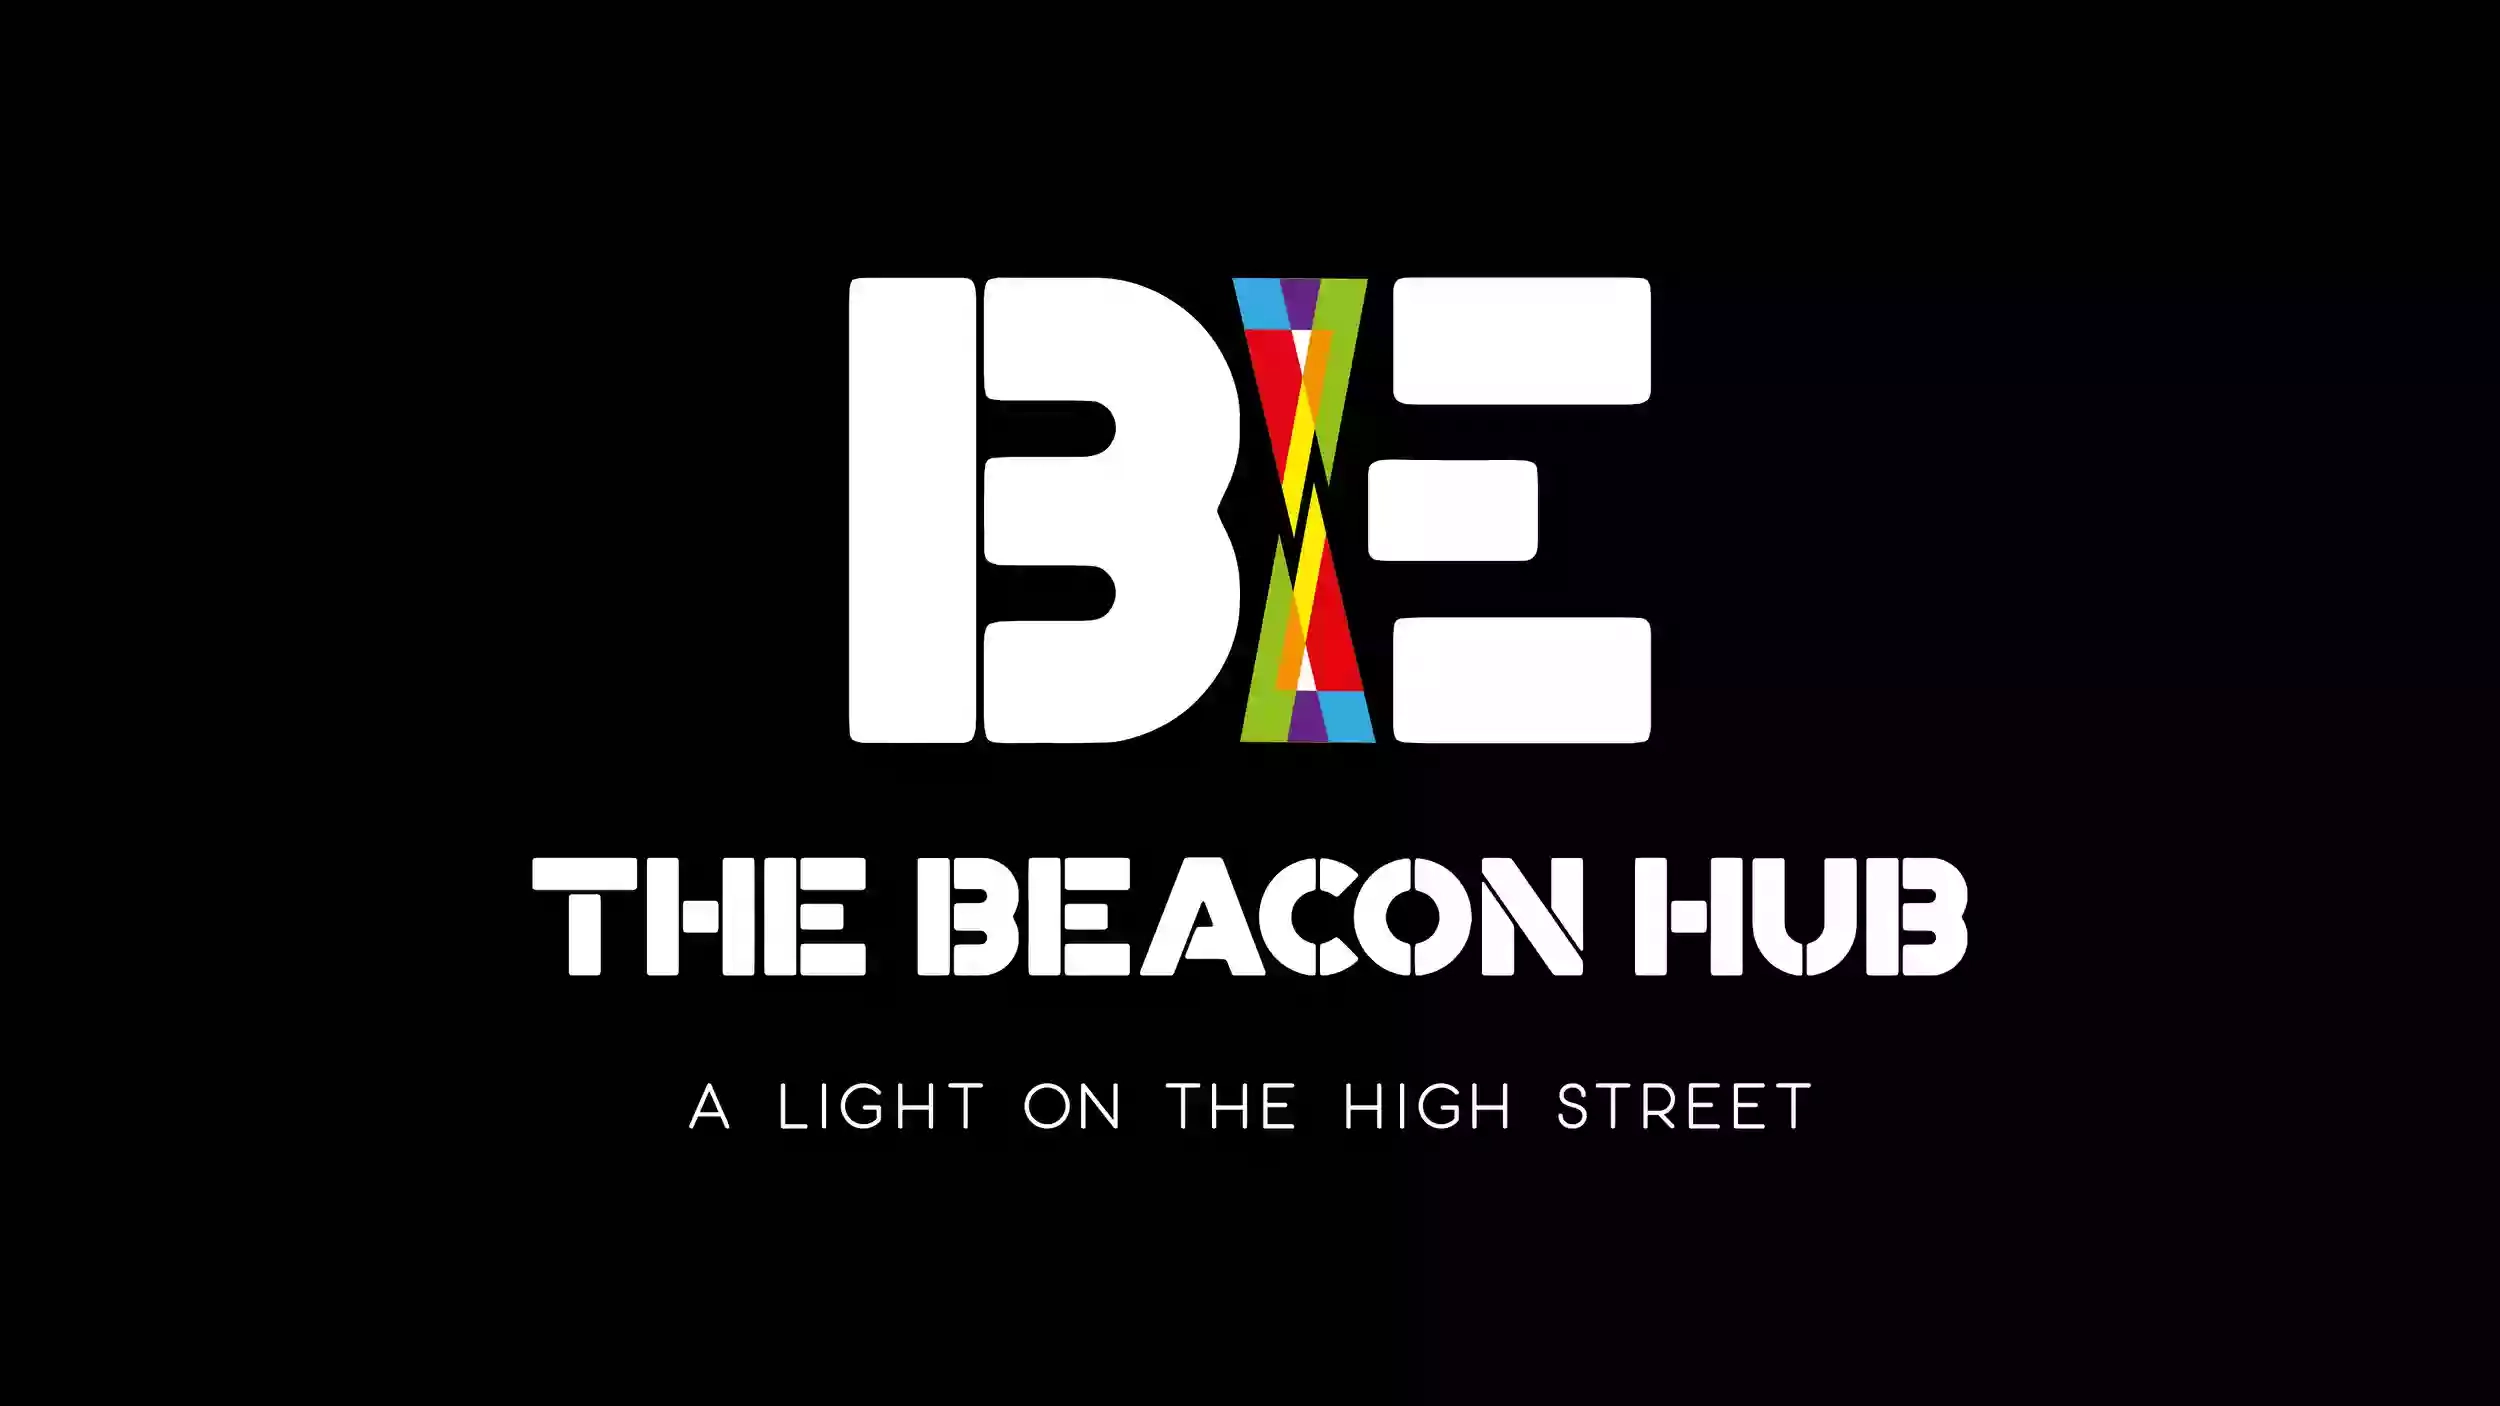 The Beacon Hub Portishead